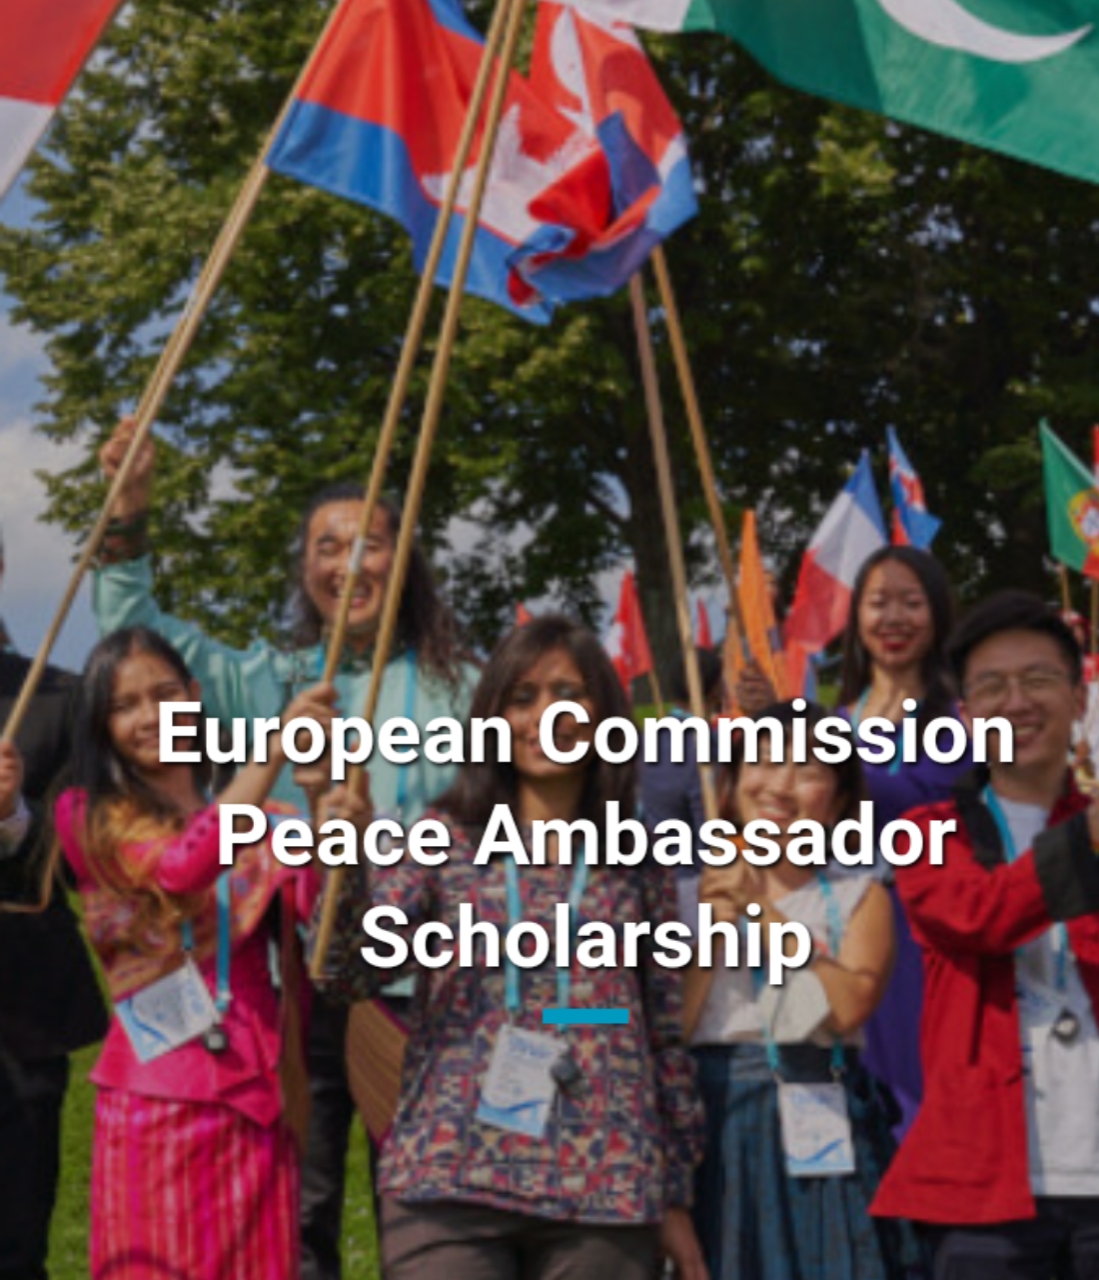 Apply: 2022 European Commission Peace Ambassador Scholarship